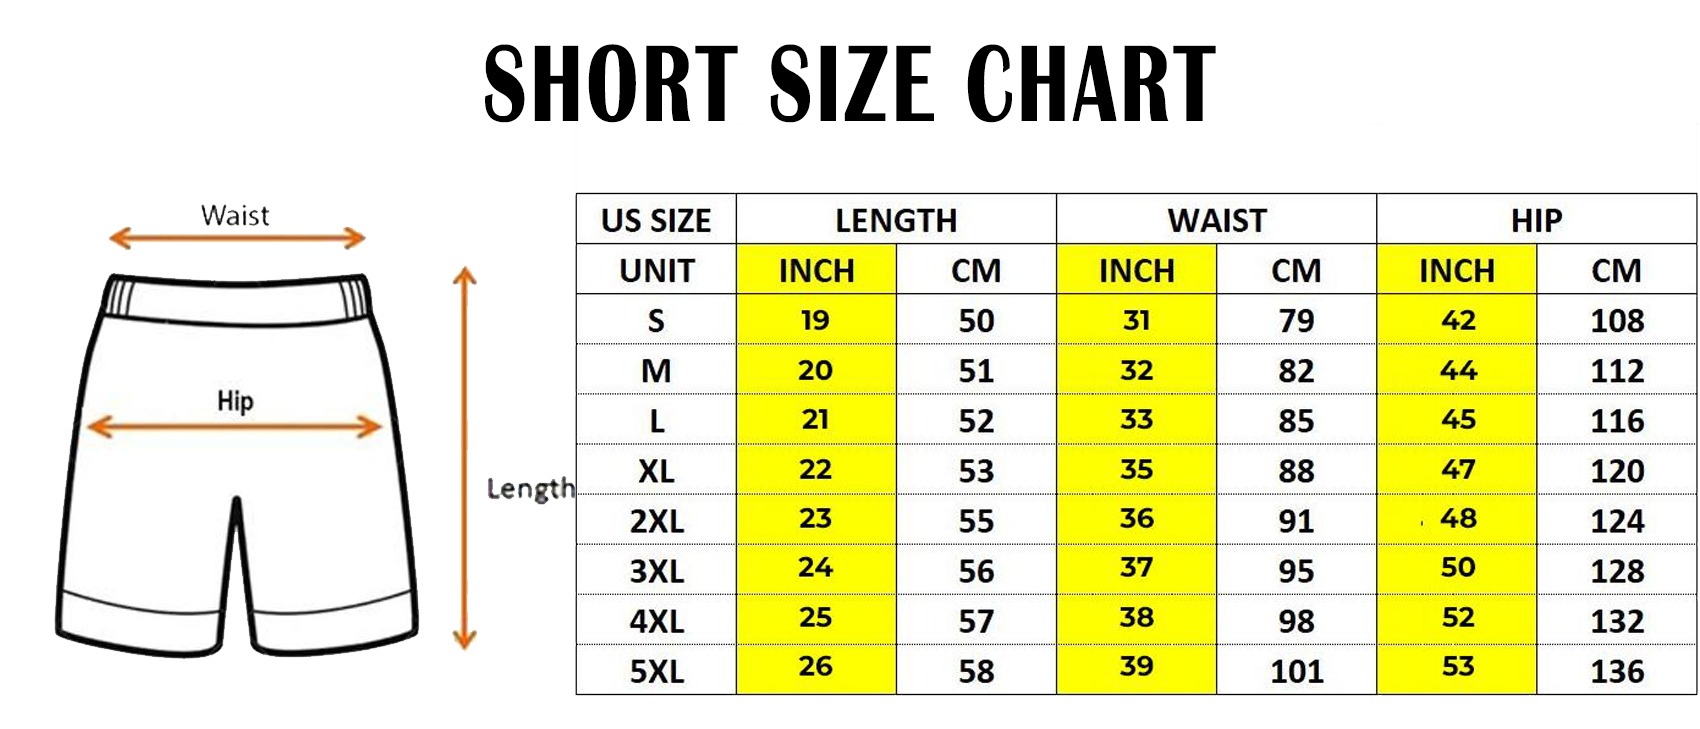 Short Size Chart